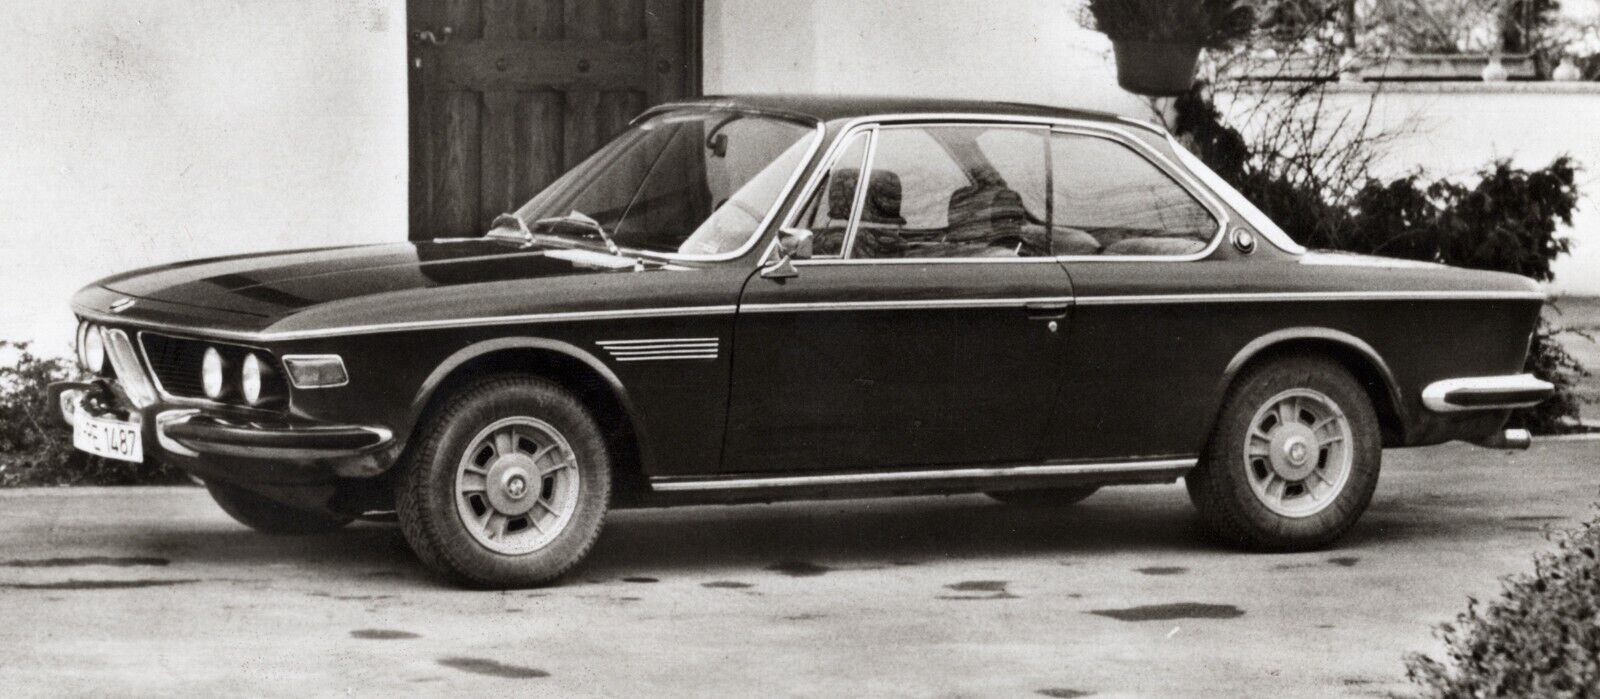 Larger size BMW 3.0 CS Factory Werkfoto Nr. 0027, amazing classic car, Vintage V